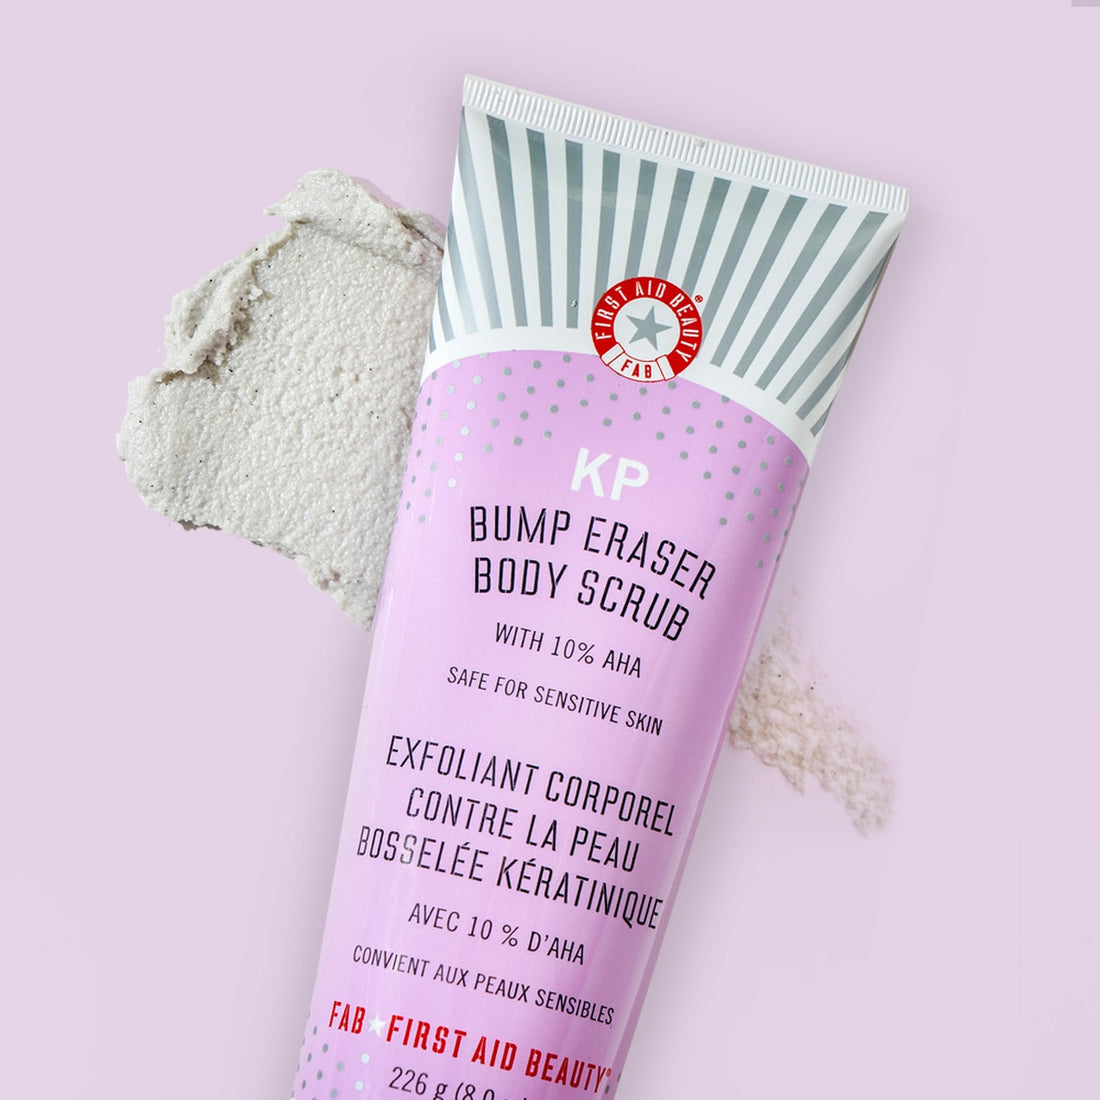 First Aid Beauty KP Bump Eraser Body Scrub with 10% AHA (2 size)